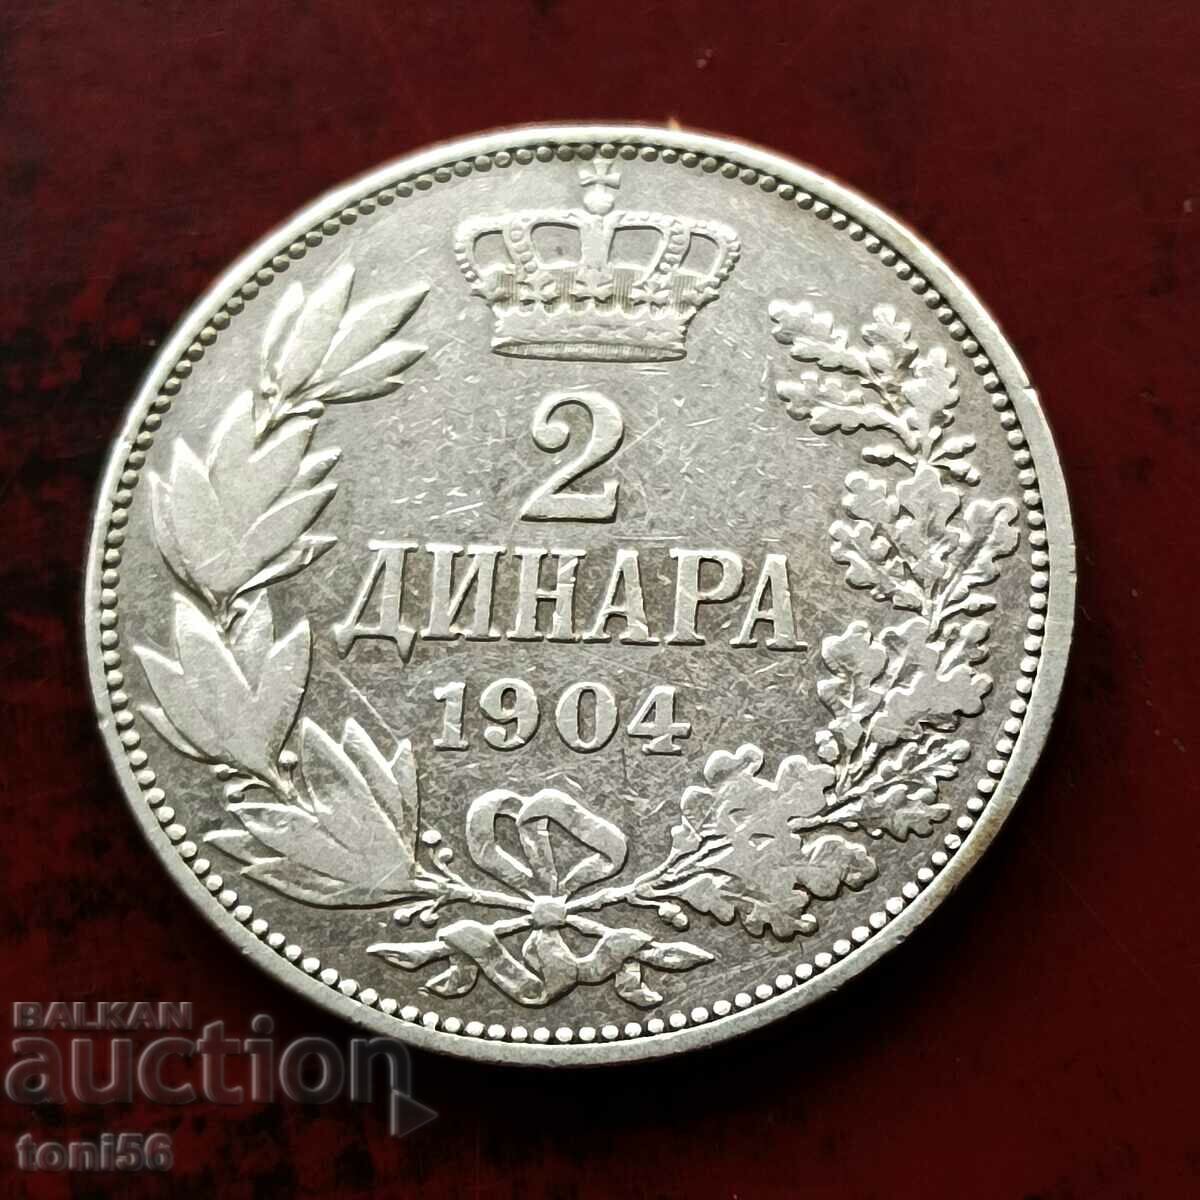 Serbia 2 dinars 1904 - silver